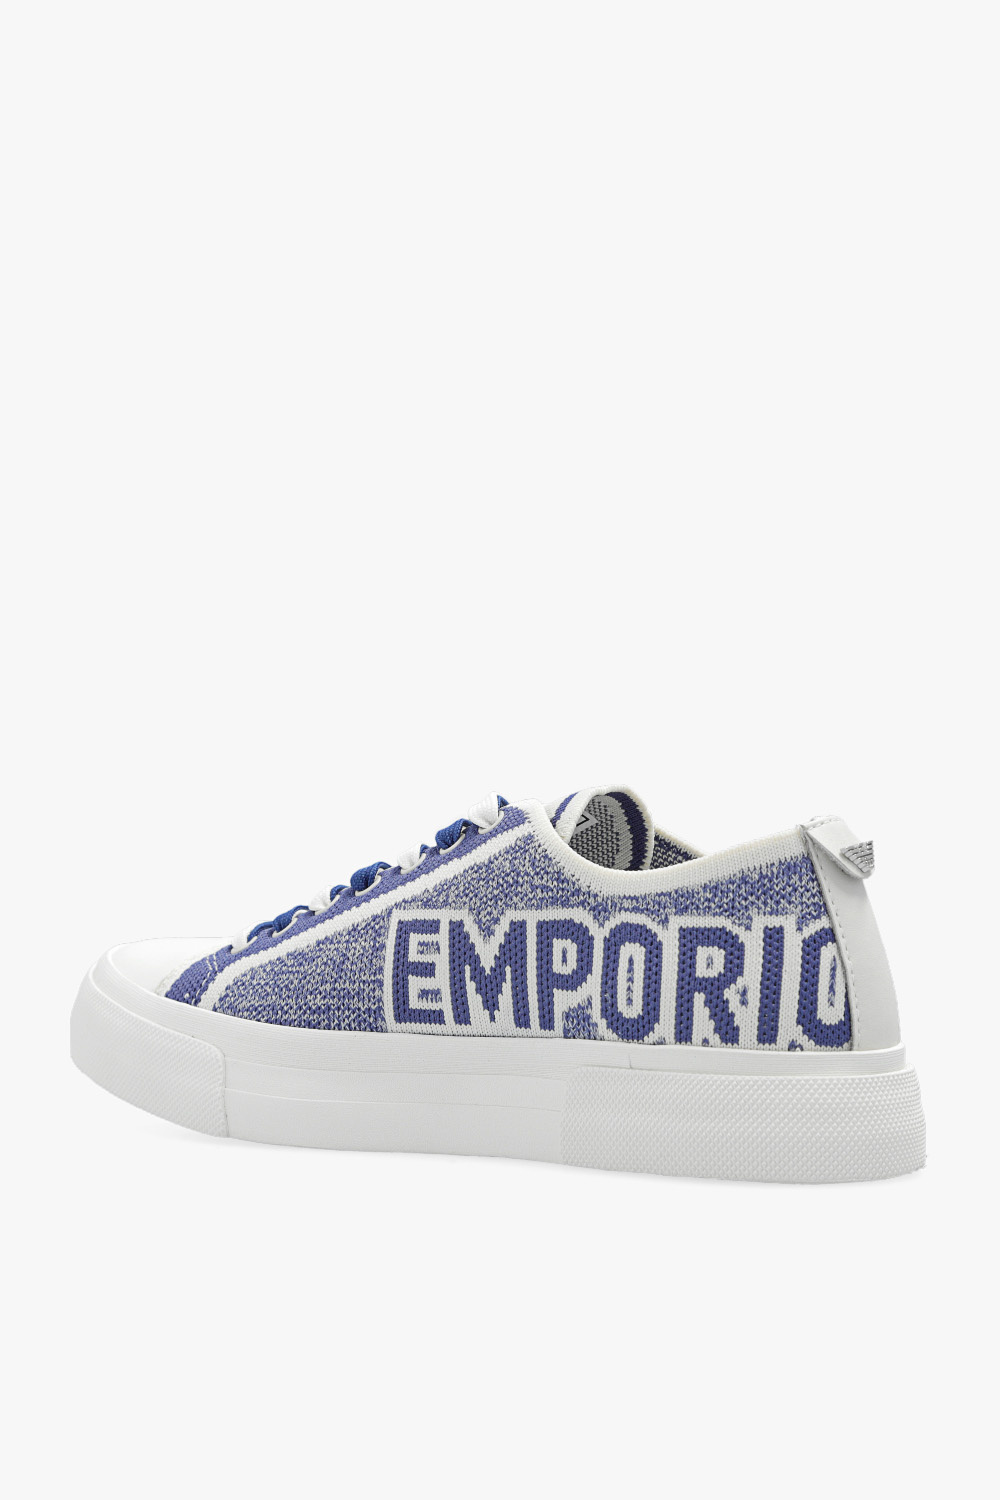 Emporio armani Set Sneakers with World